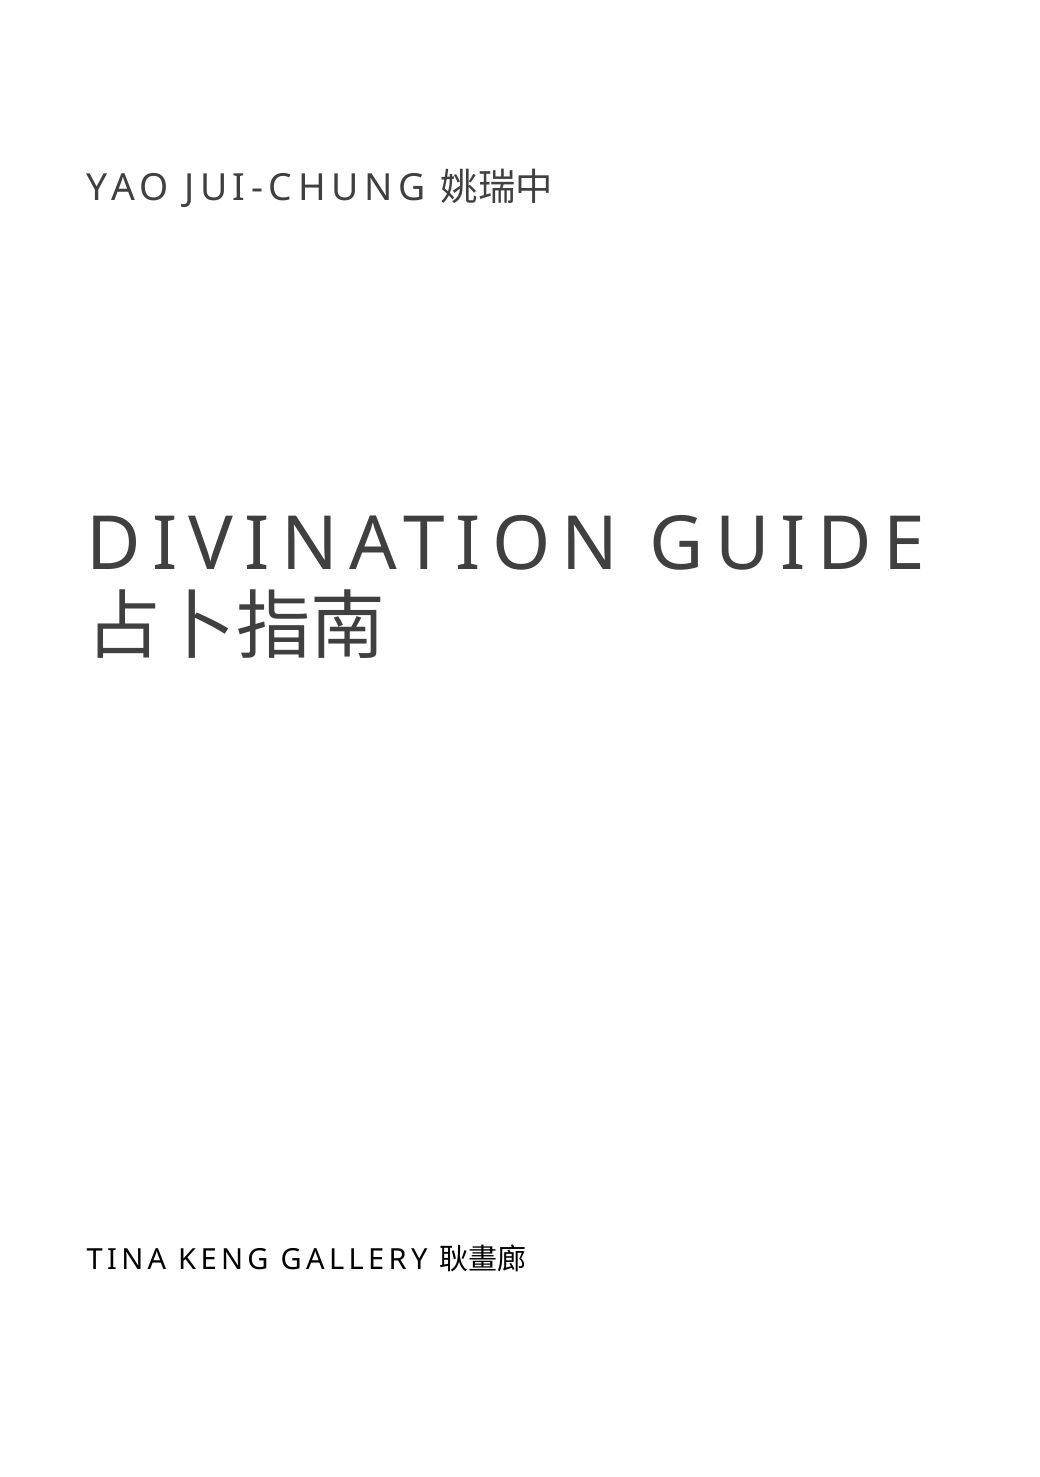 Divination Guide